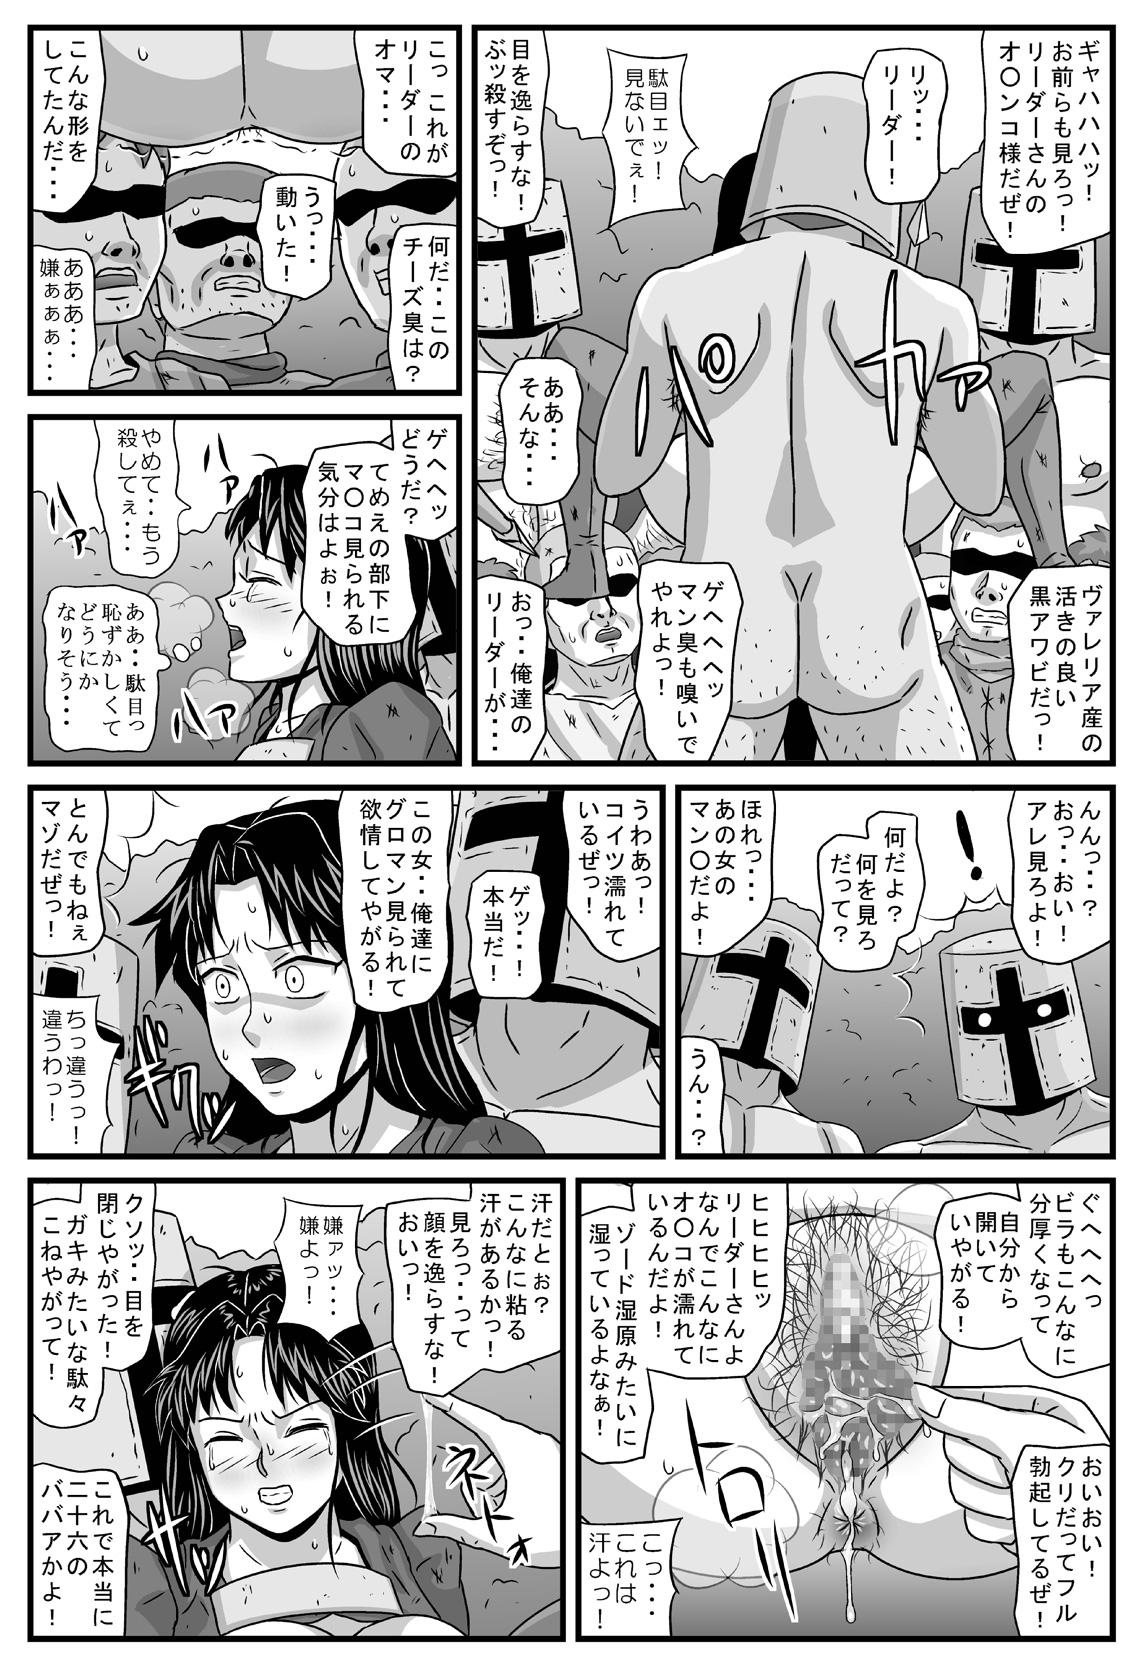 Vintage Guerrilla no Onna Leader wa Honoo no 26-sai Kurokami Shojo - Tactics ogre Female - Page 8